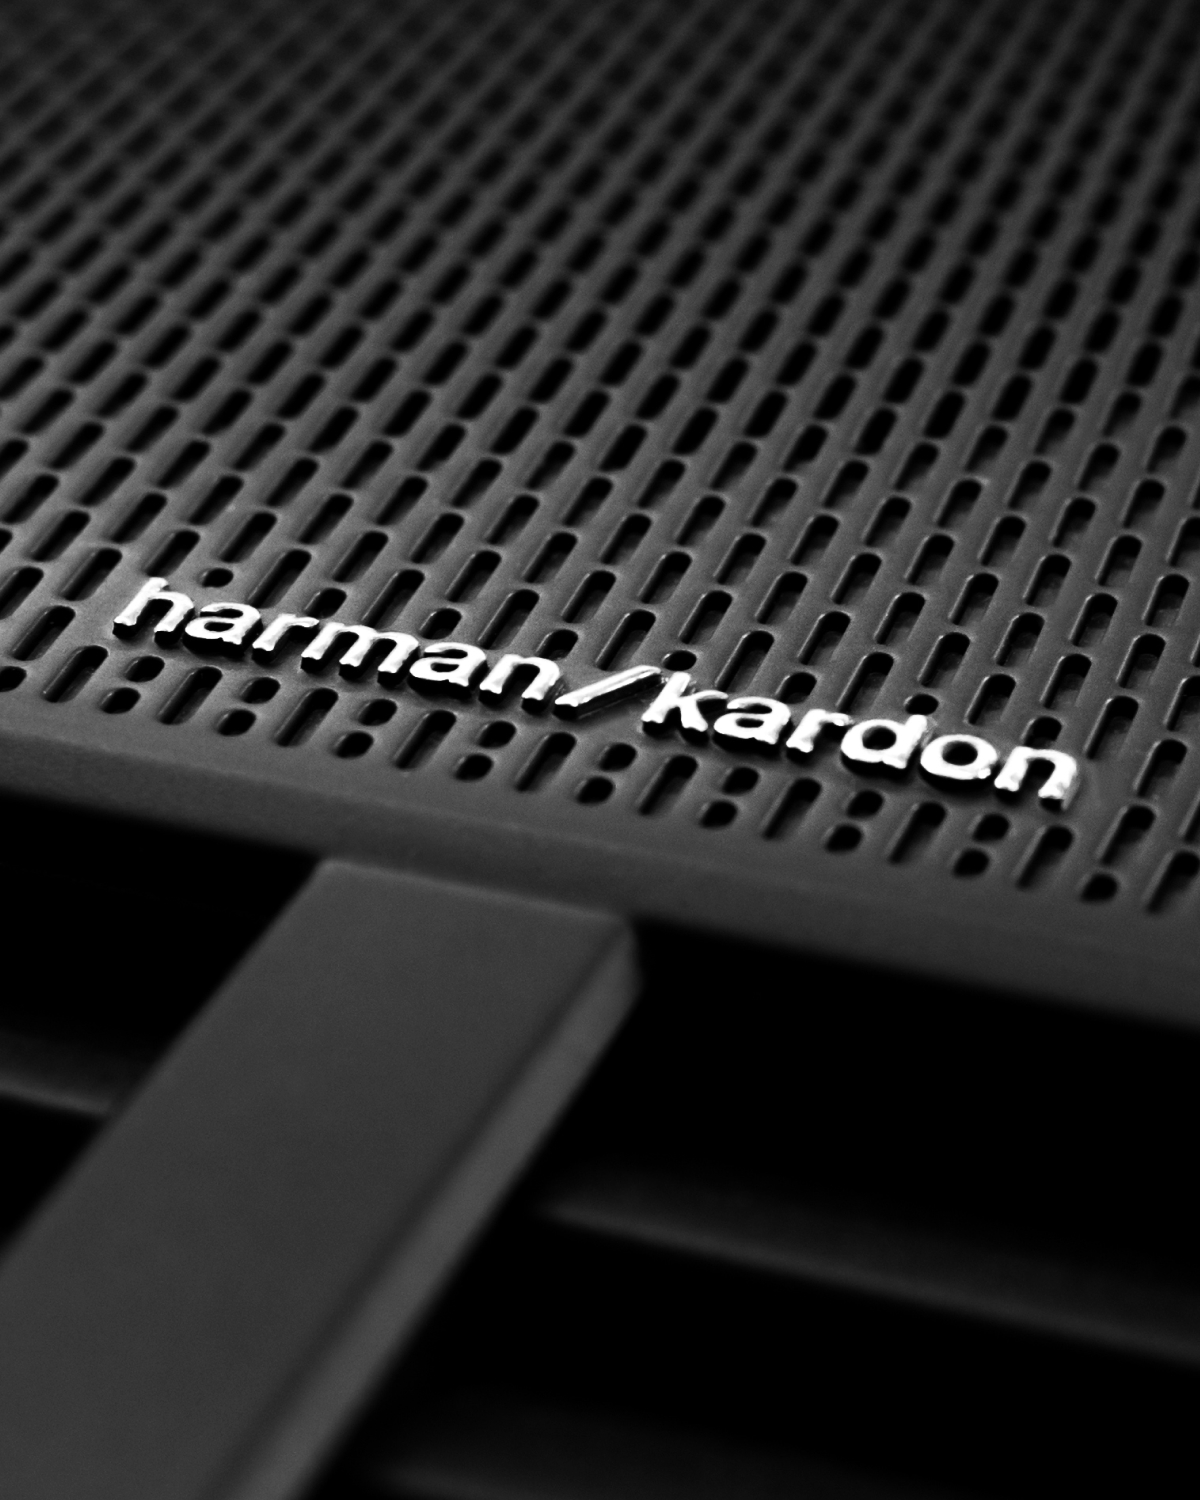 Close-up on the black speakers from Harman/Kardon